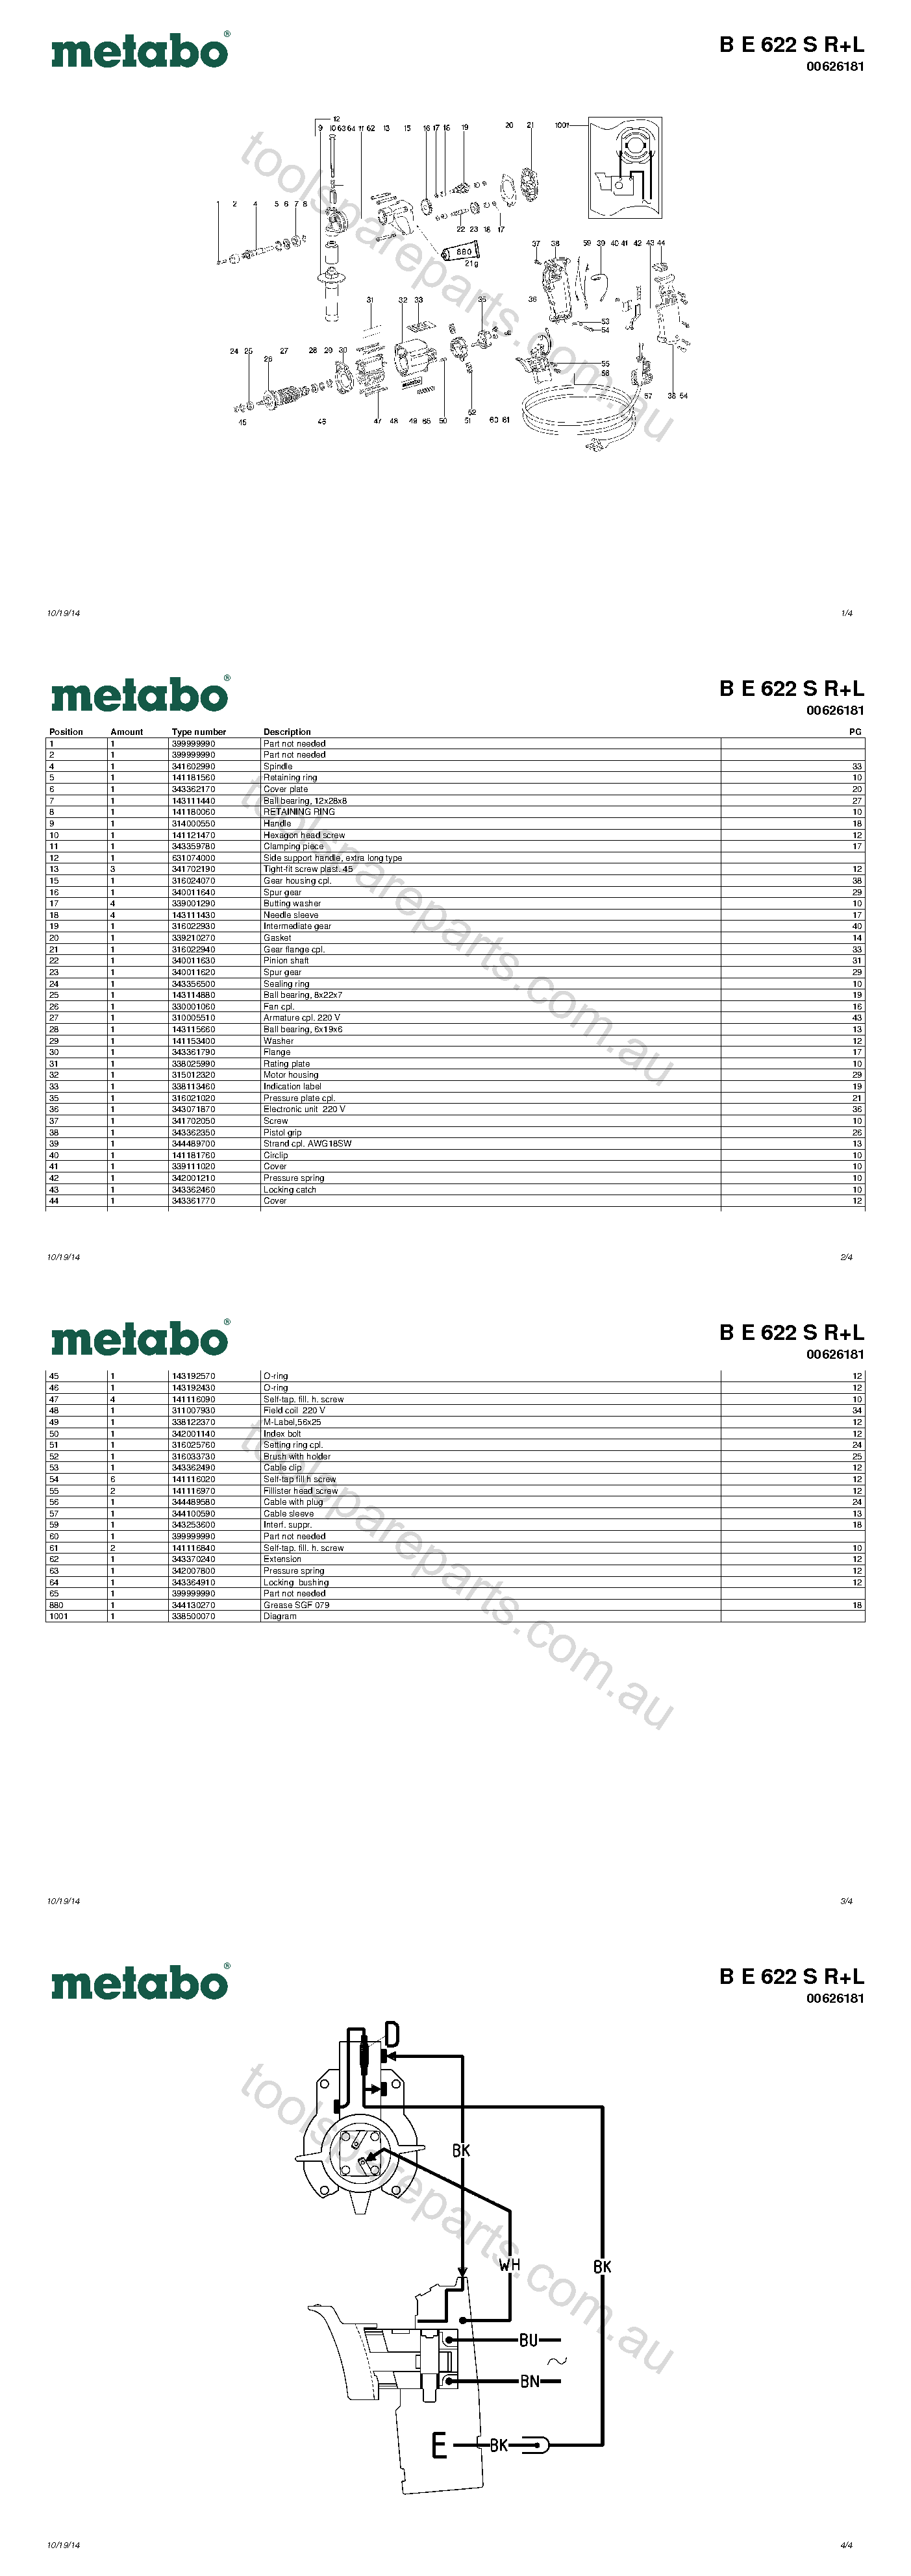 Metabo B E 622 S R+L 00626181  Diagram 1